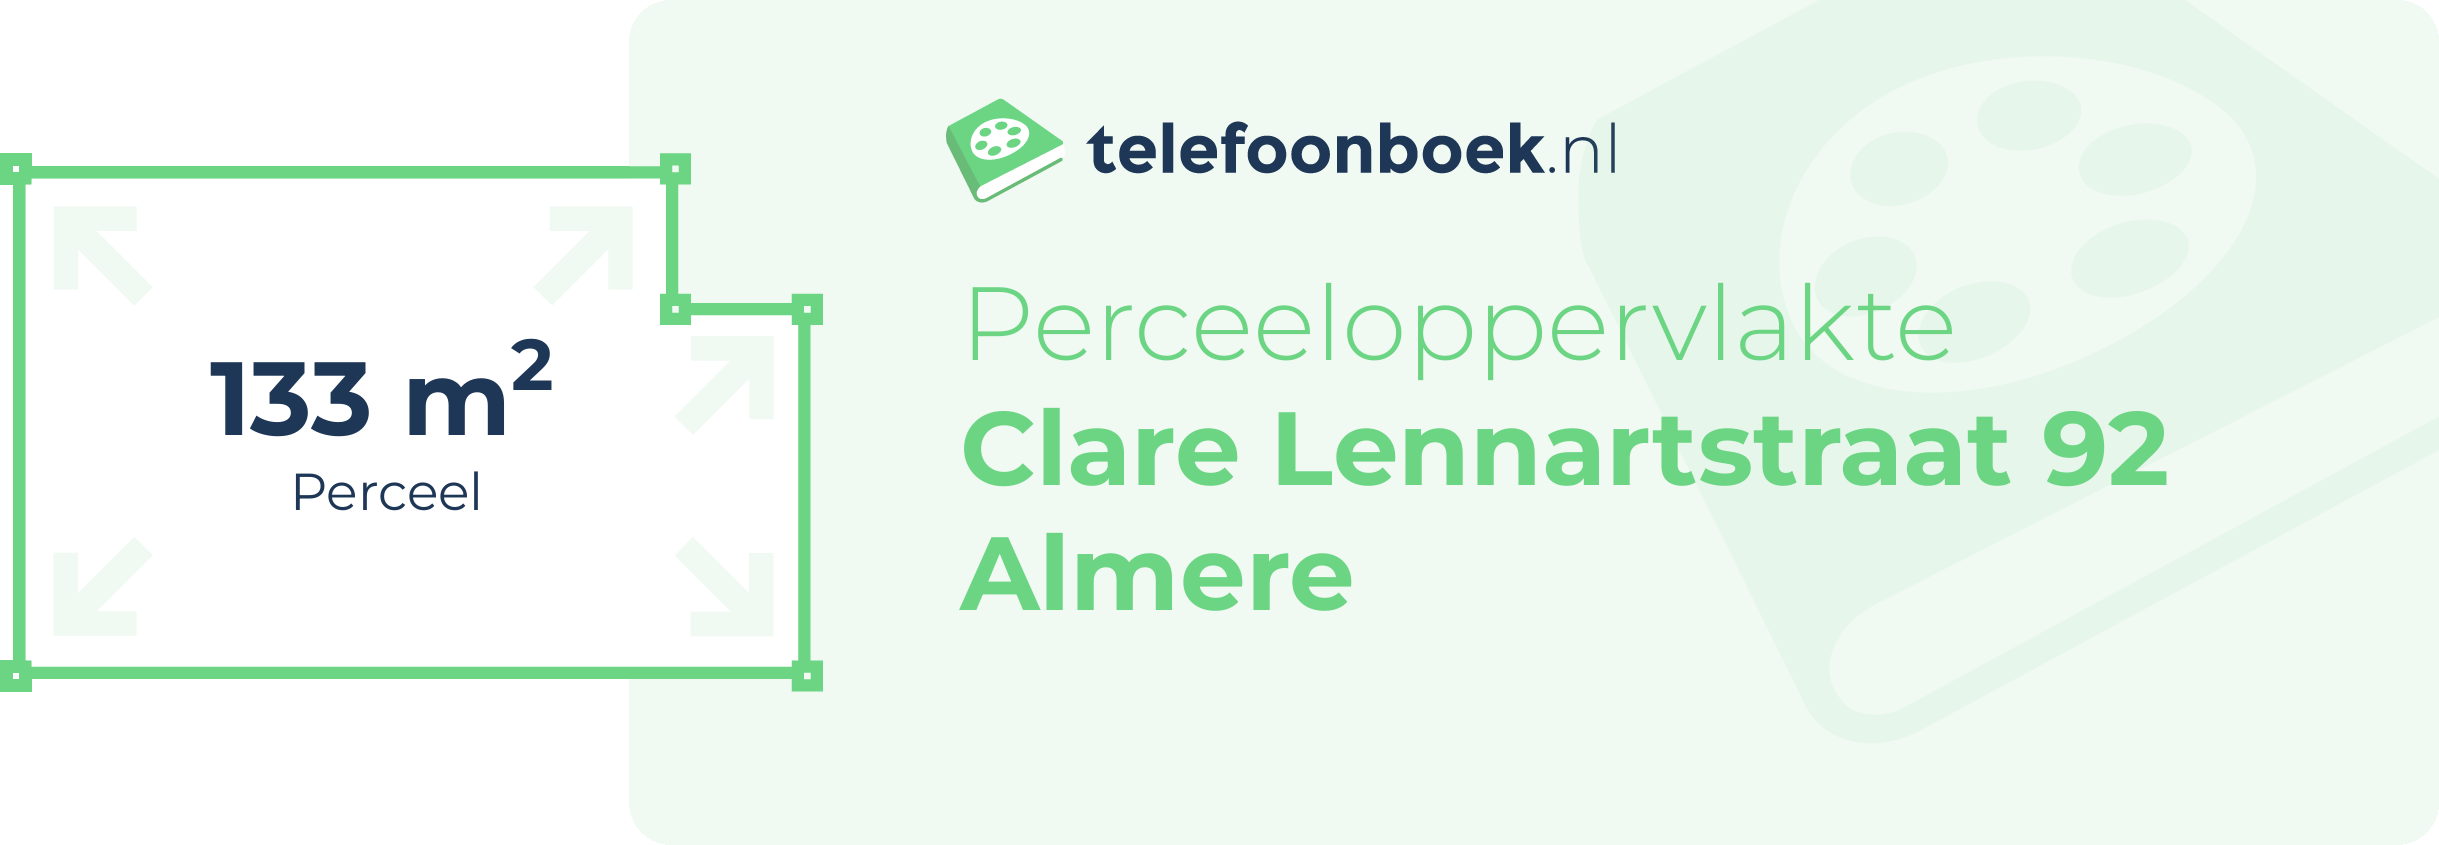 Perceeloppervlakte Clare Lennartstraat 92 Almere